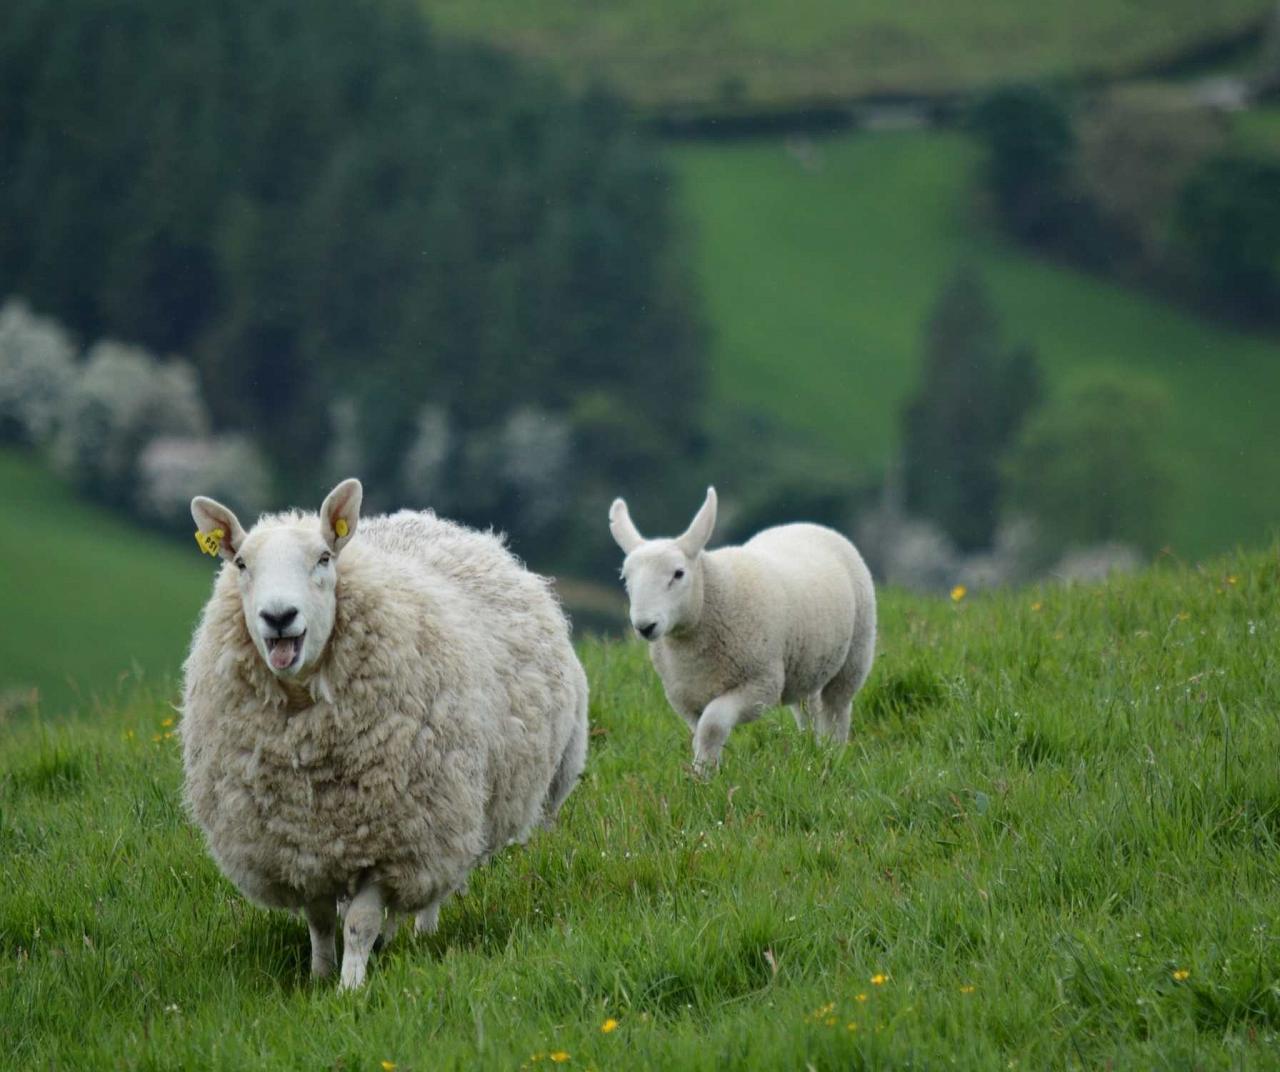 Sheep, Scotland birding, Ireland, Birdwatching, United Kingdom birds, Guided Nature Tour, Naturalist Journeys